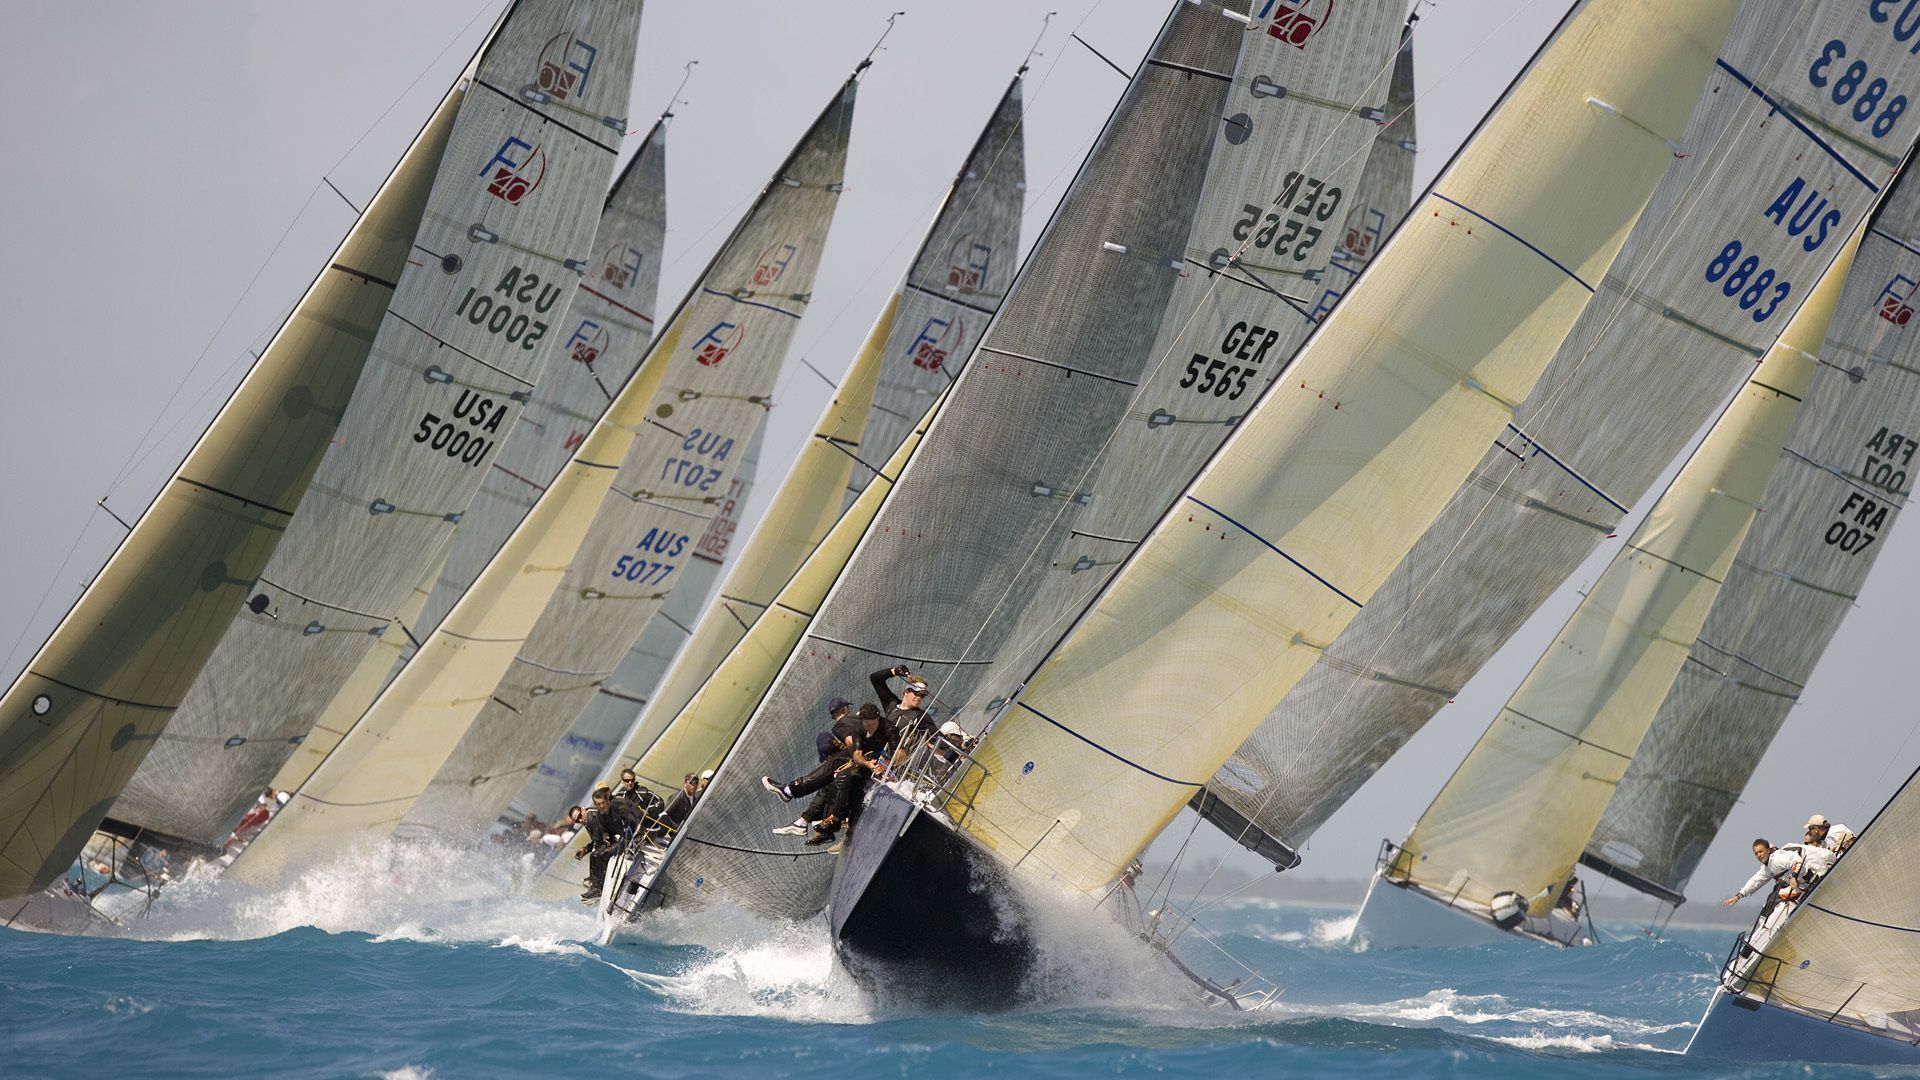 regatta, Sailing, Race, Racing, Boat Wallpaper